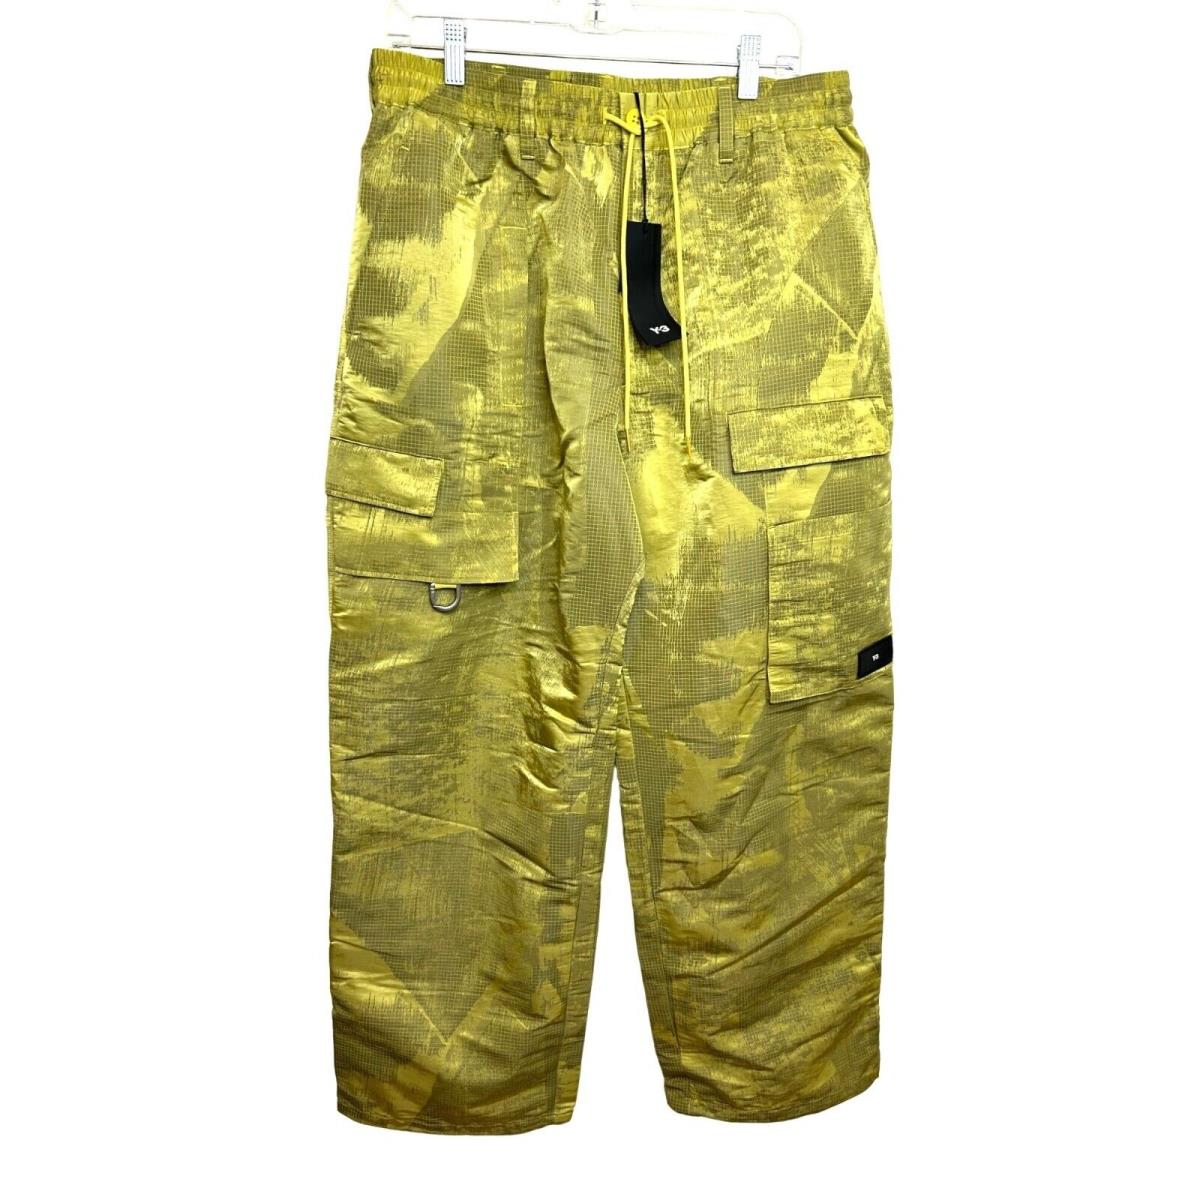 Adidas Y-3 Yamamoto Men s Pants L Jacquard Ripstop IP7935 Yellow Black Loose Fit